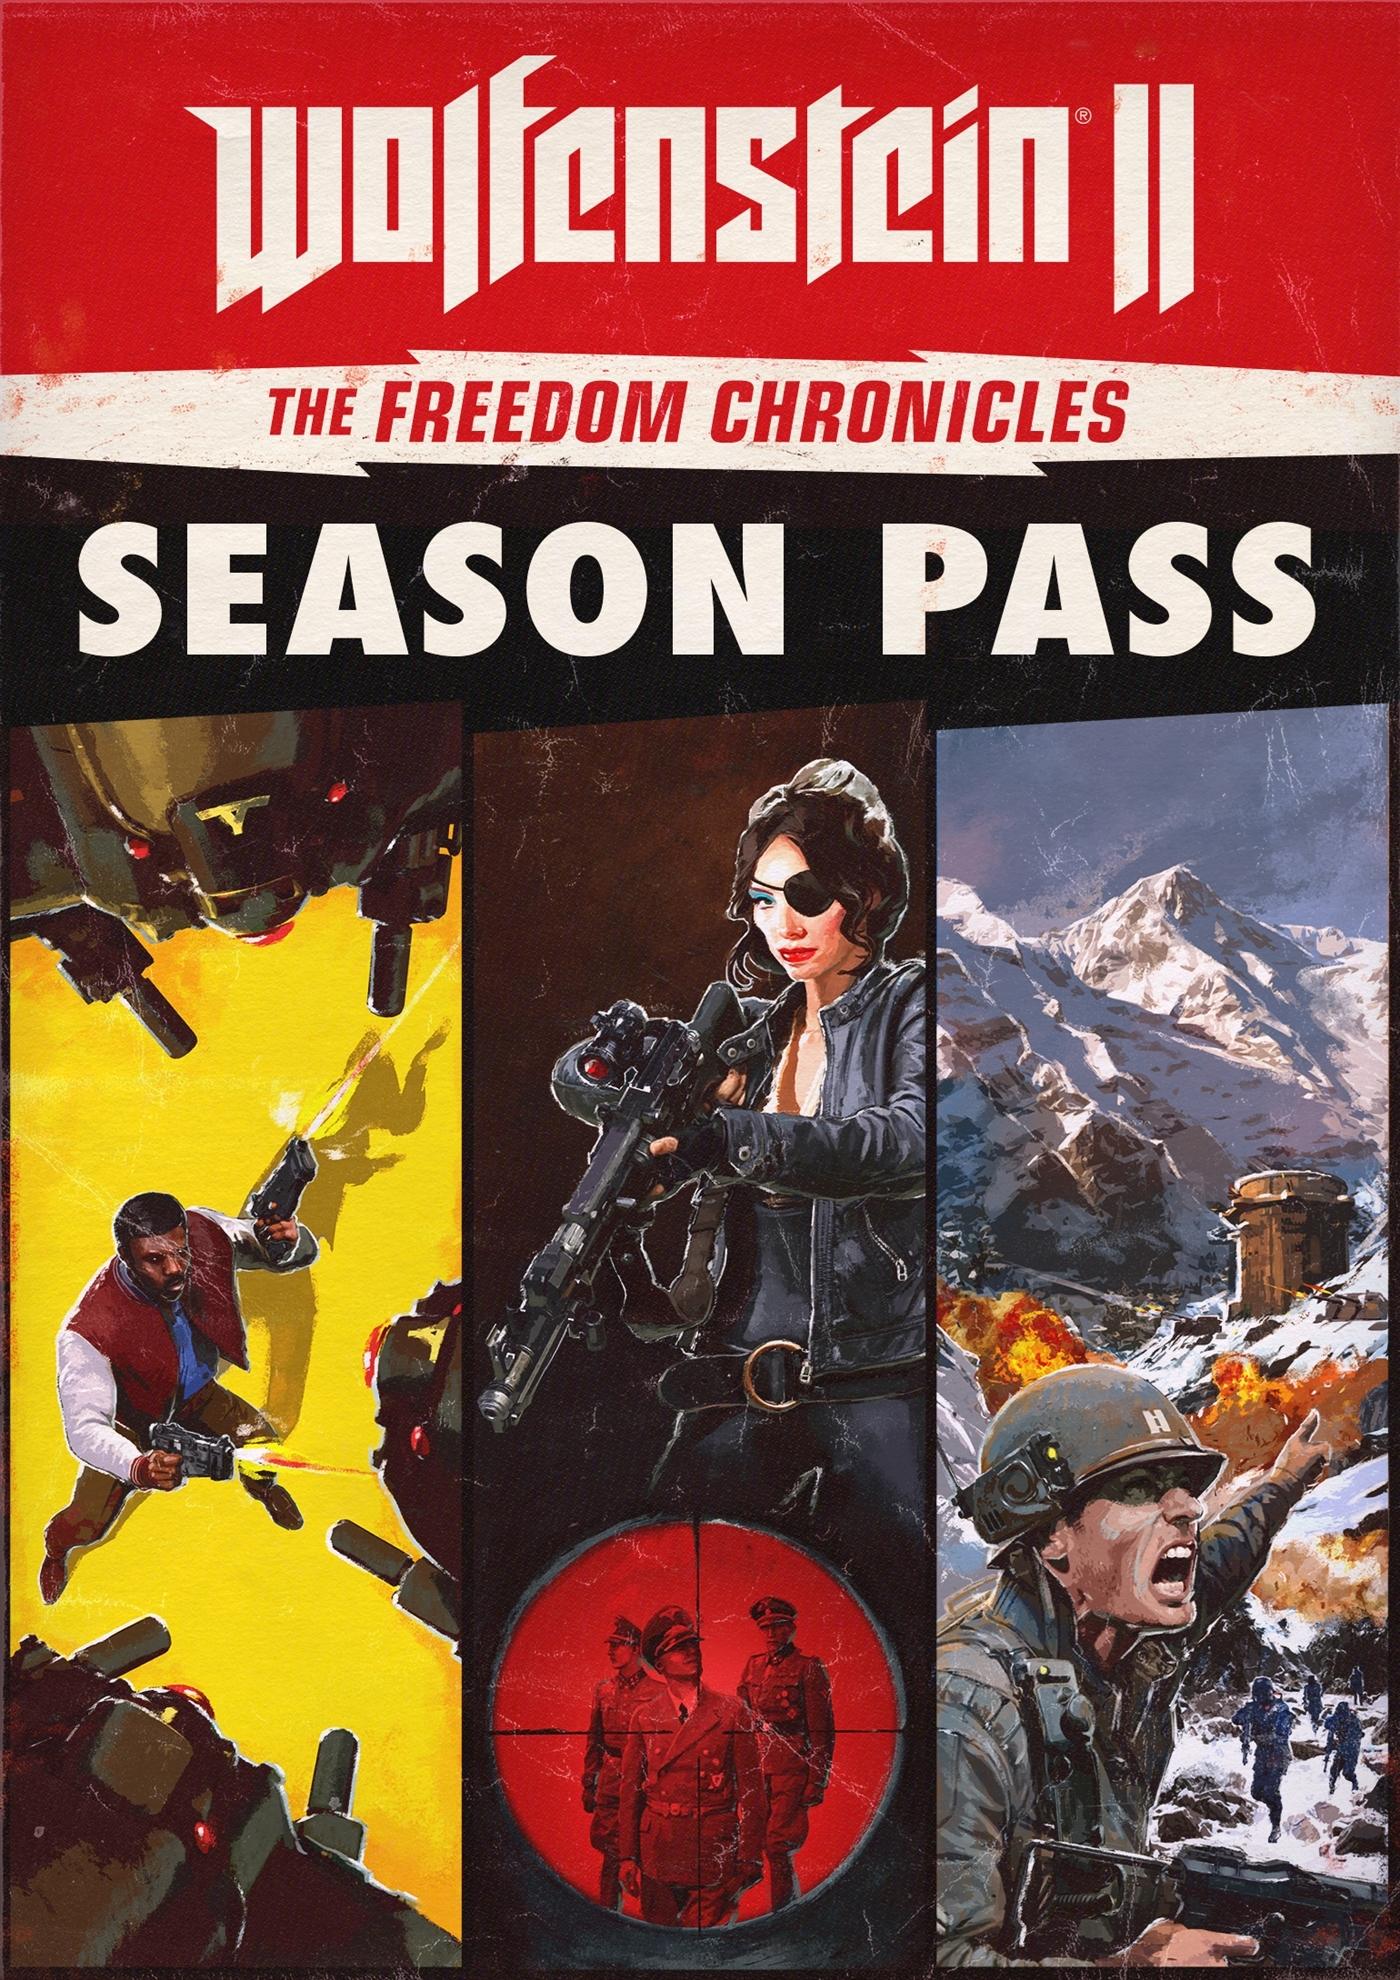 Wolfenstein® II: The Freedom Chronicles Season Pass